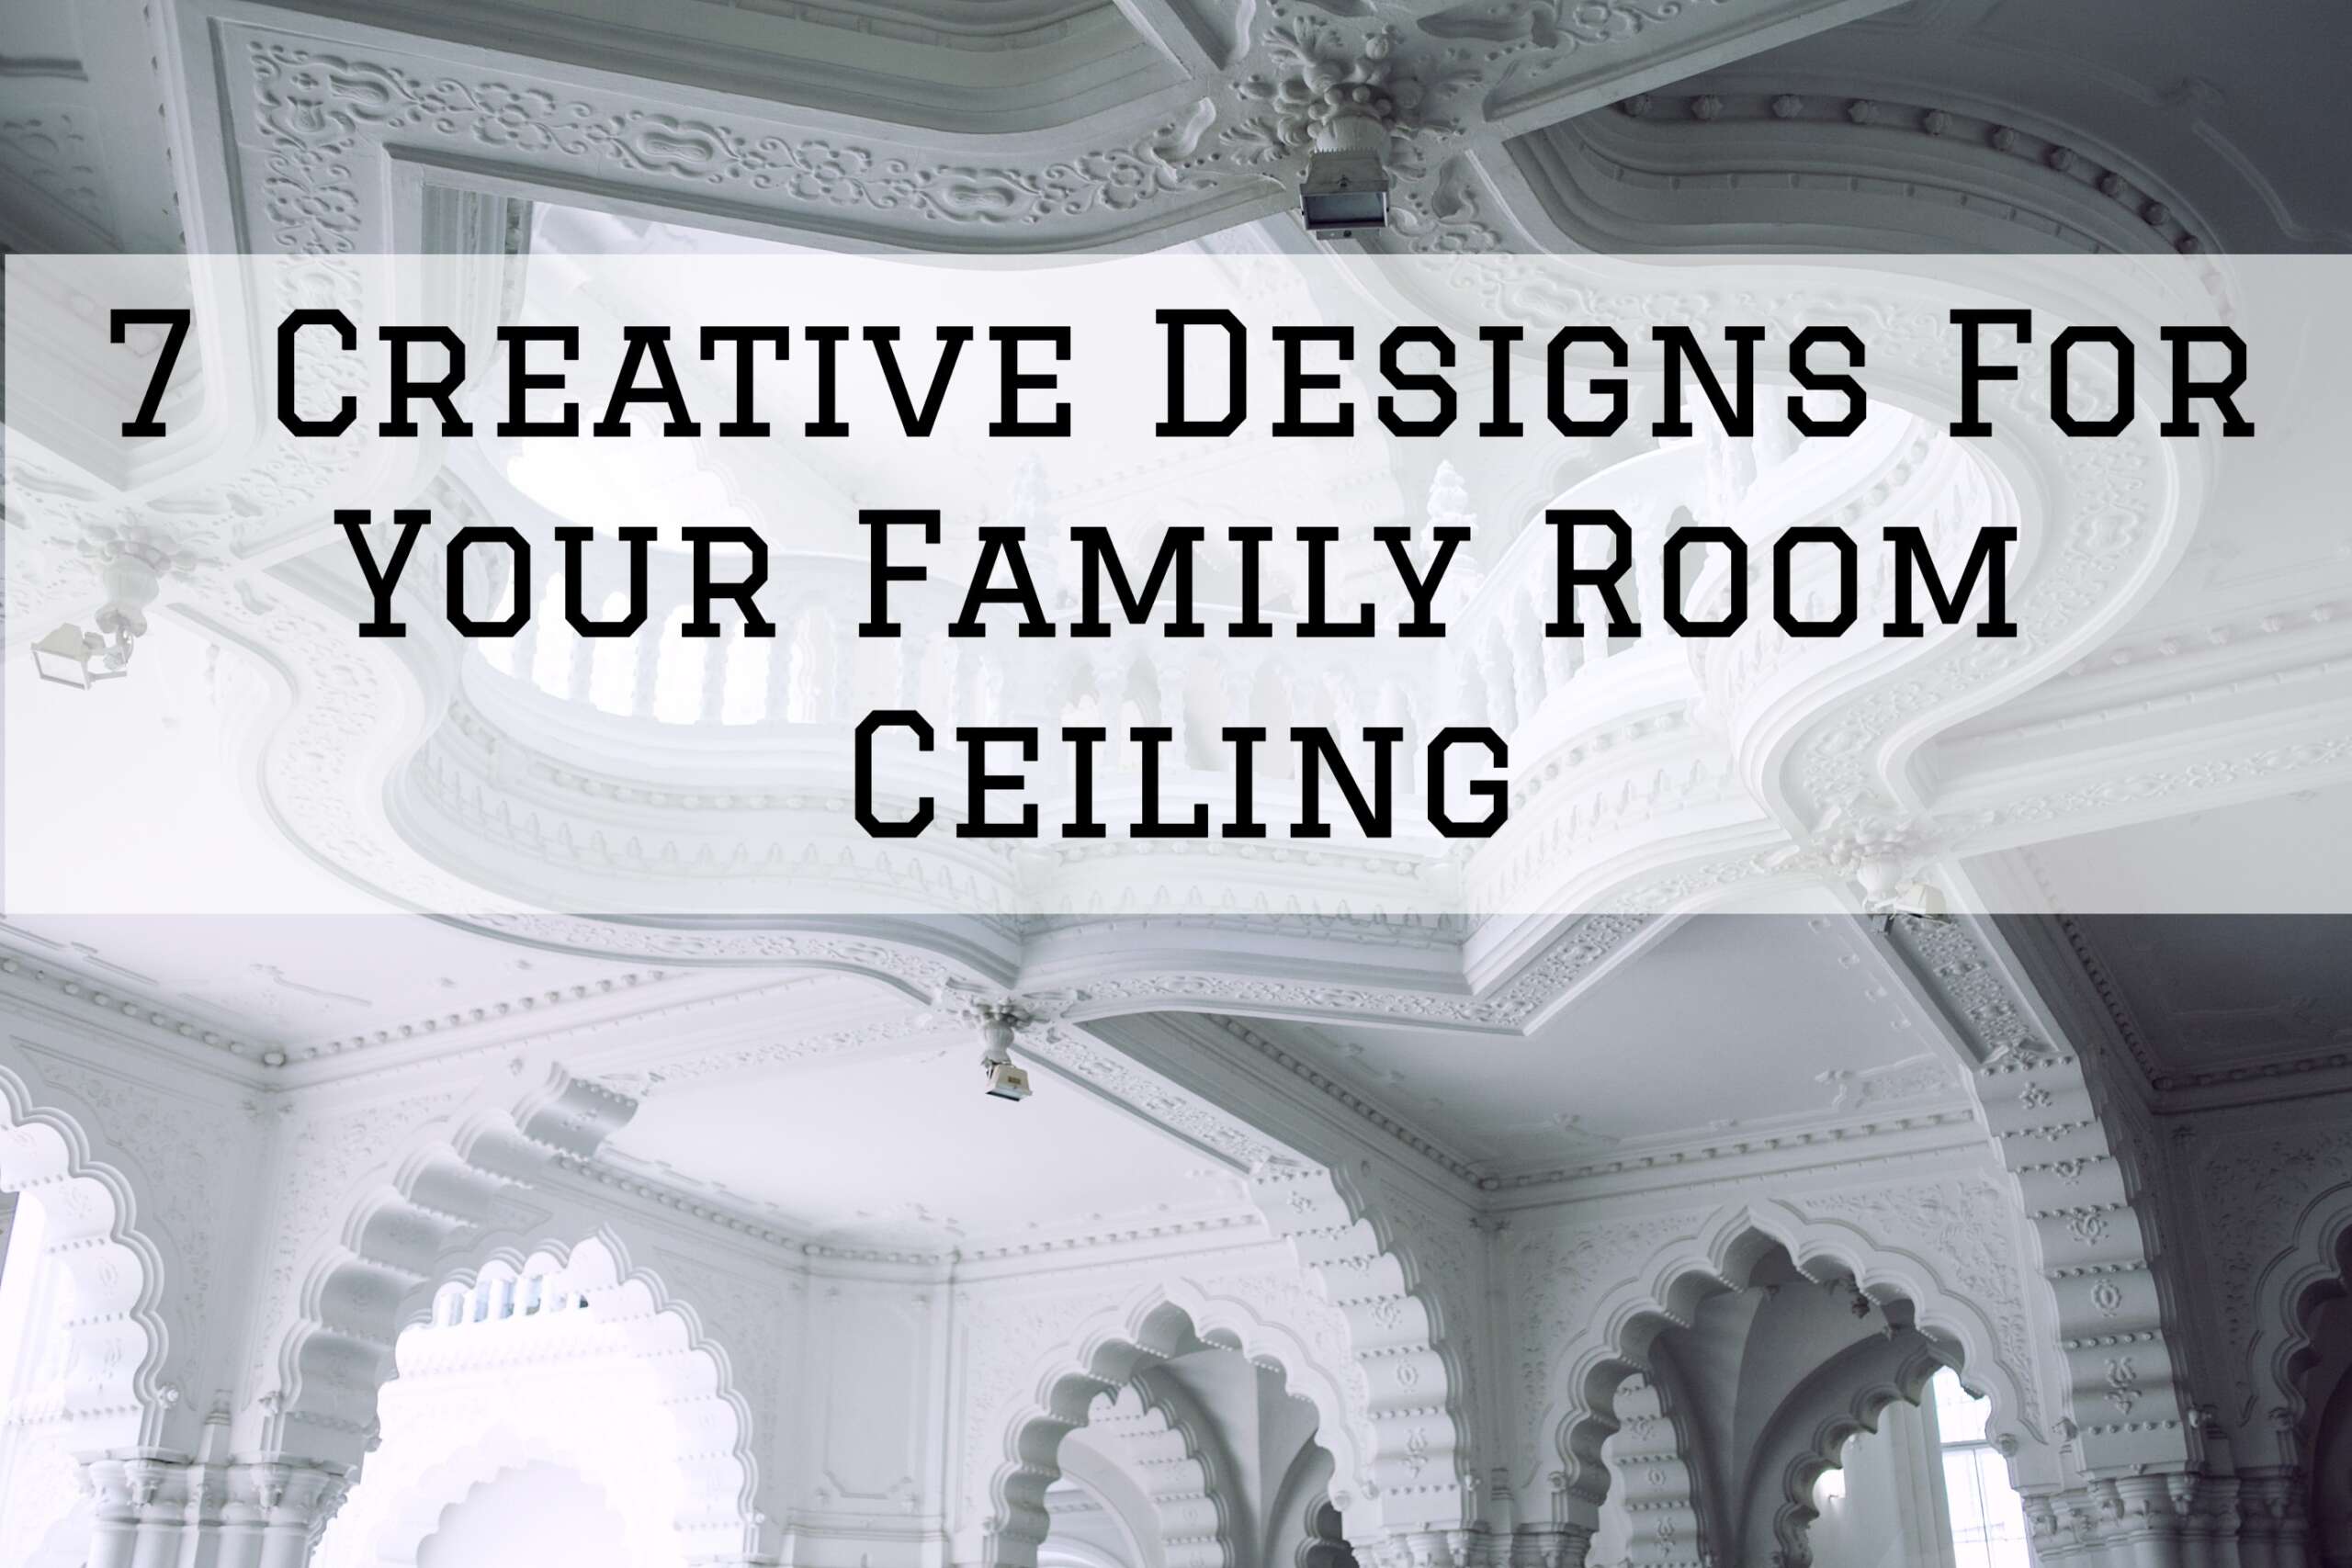 2020-12-27 Image Painting Inc McLean VA Family Room Ceiling Designs